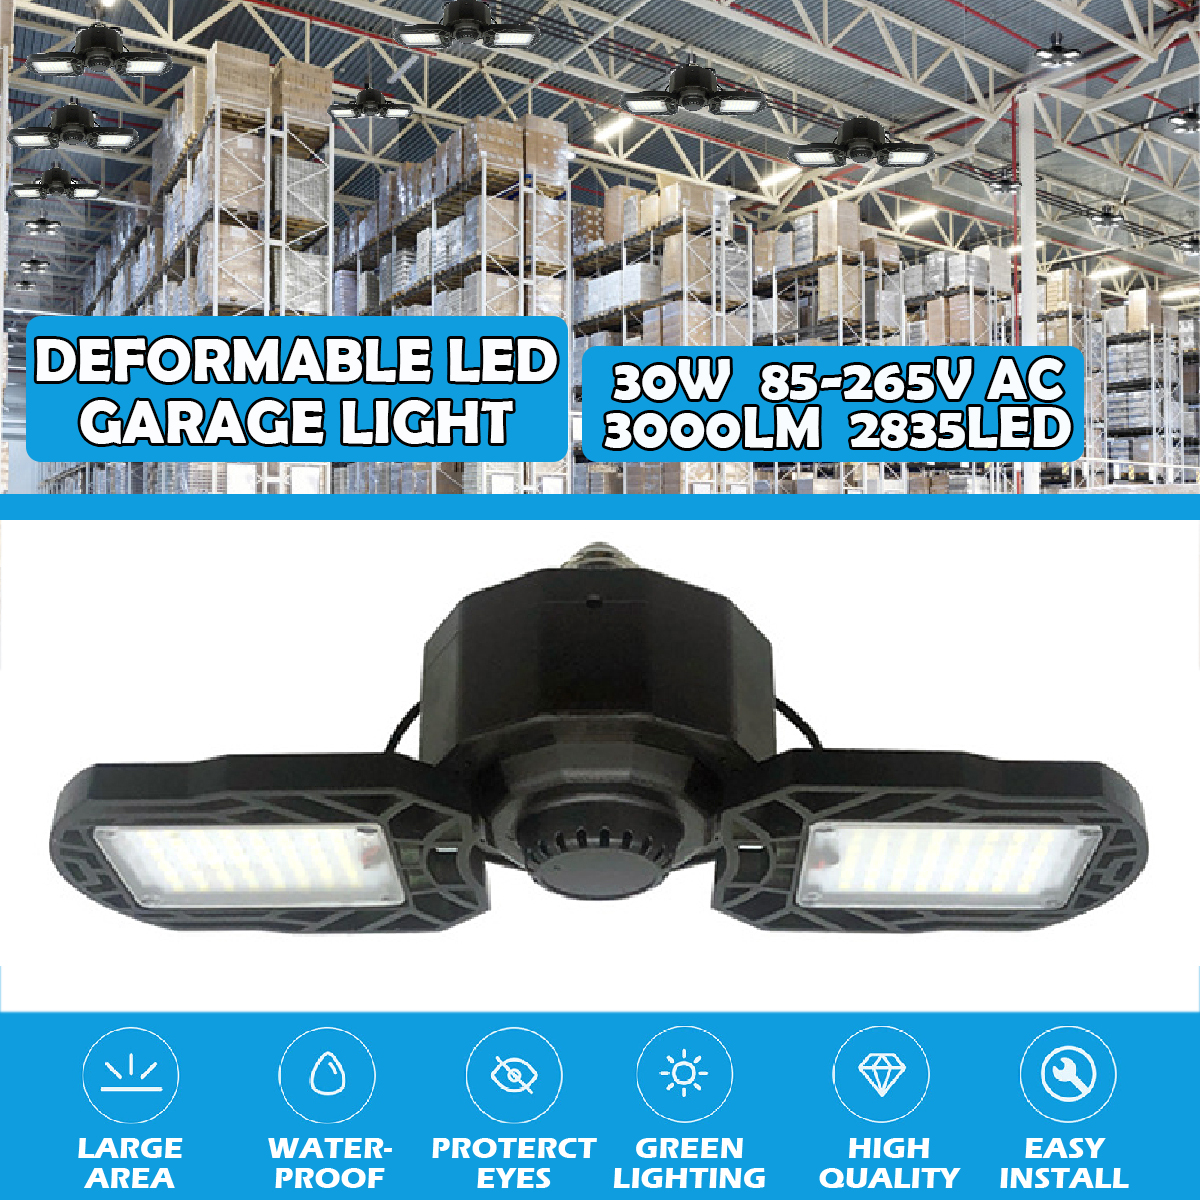 30W-LED-Garage-Lamp-3000LM-Shop-Work-E27-Light-Bulb-Home-Ceiling-Fixture-Deformable-Lighting-85-265V-1691038-1